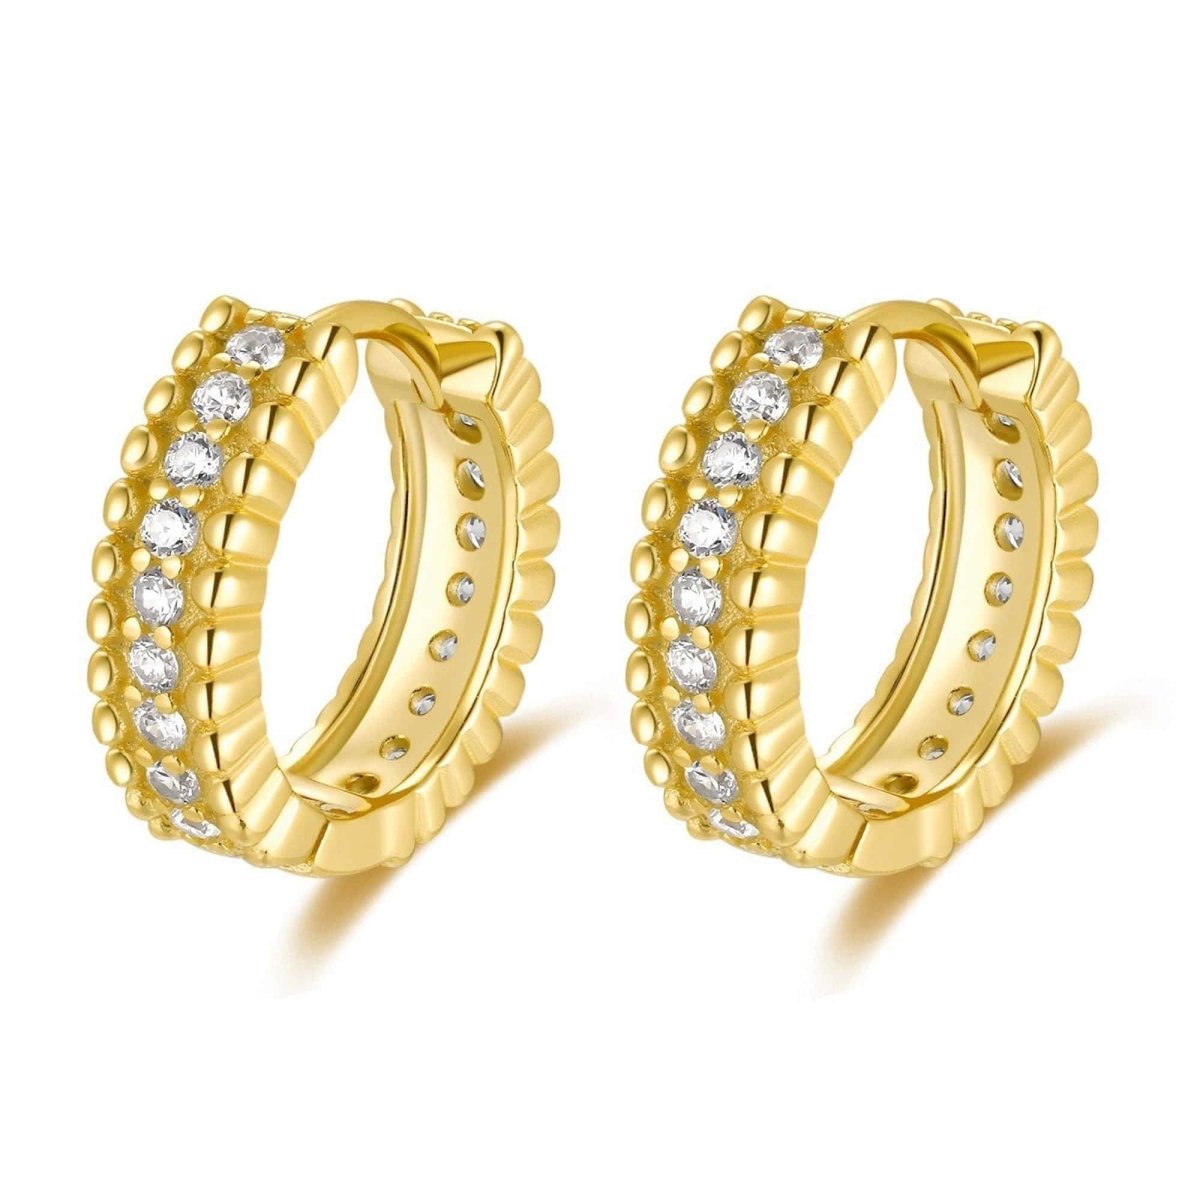 "Afrodite" Earrings - Milas Jewels Shop